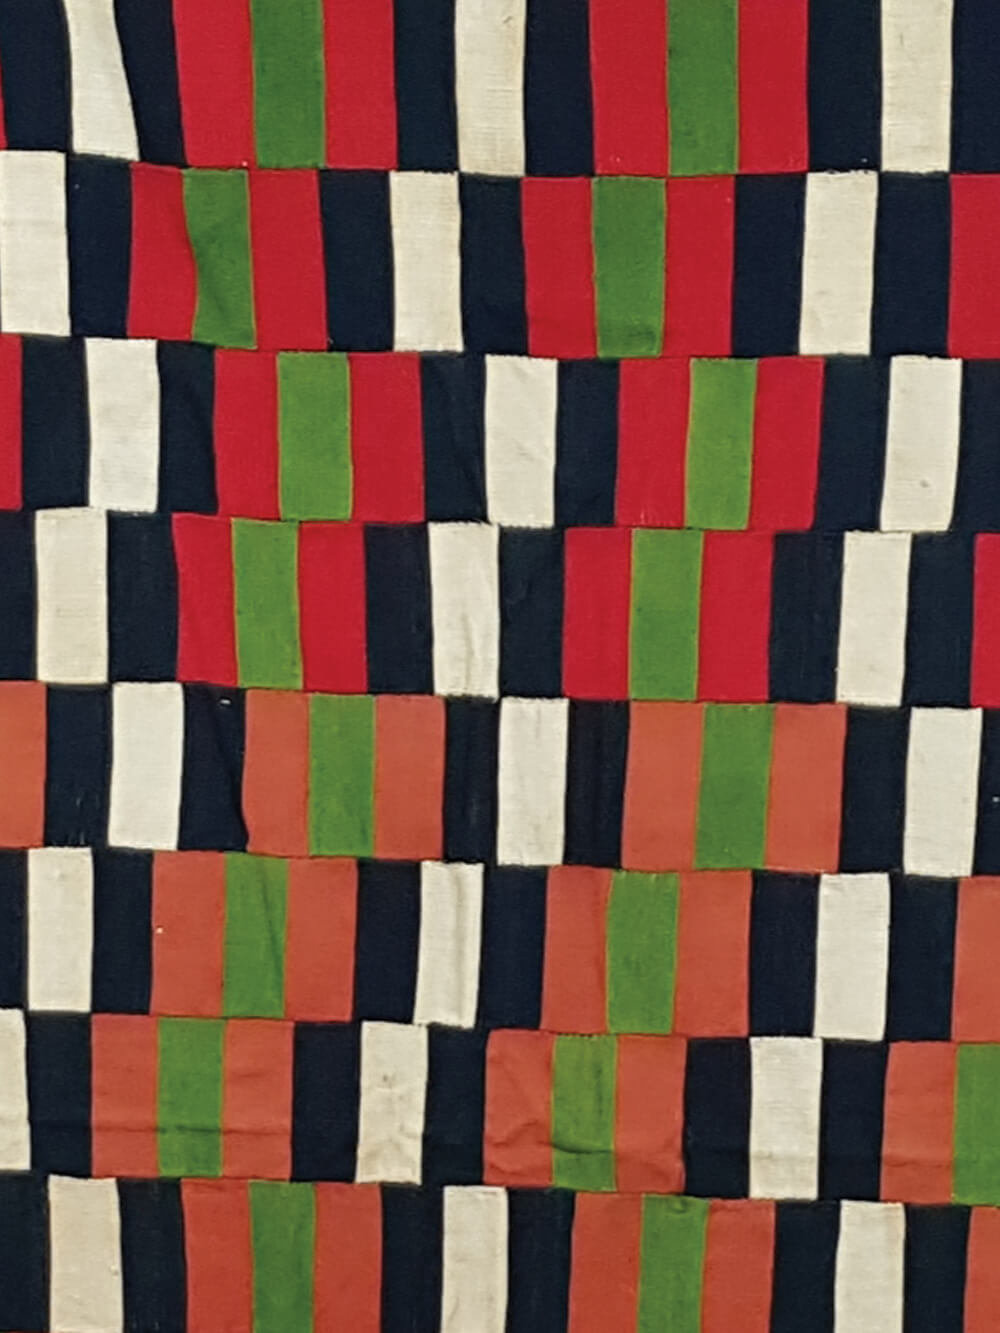 Ewe Kente textiles from the Volta region in Ghana